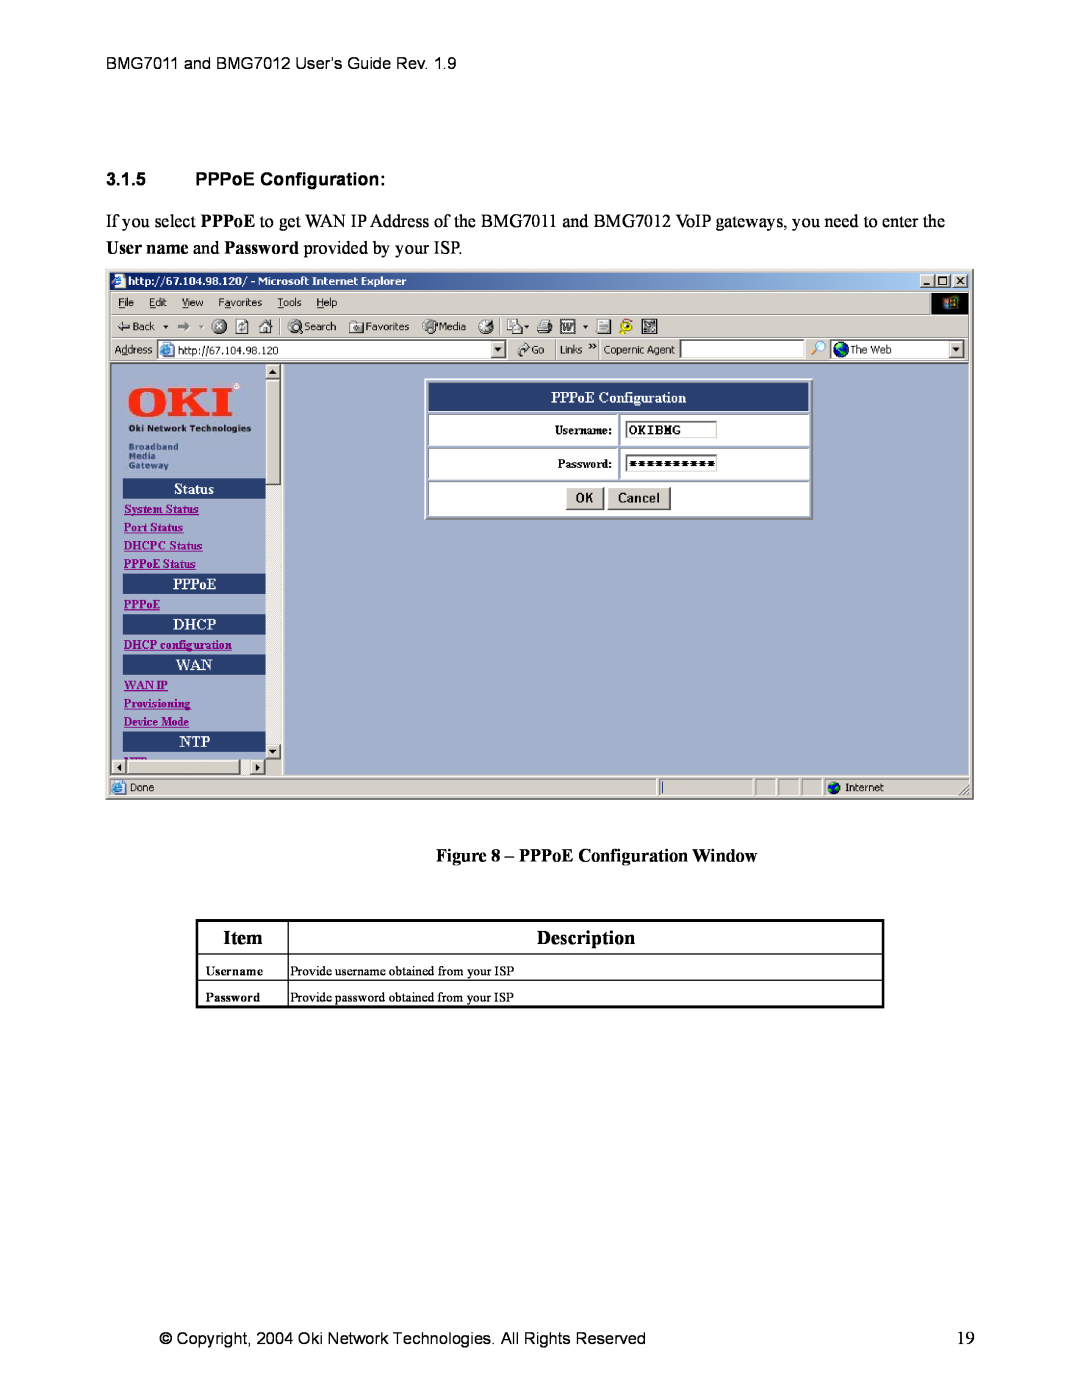 Oki BMG7011, BMG7012 manual Description, 3.1.5PPPoE Configuration, PPPoE Configuration Window 